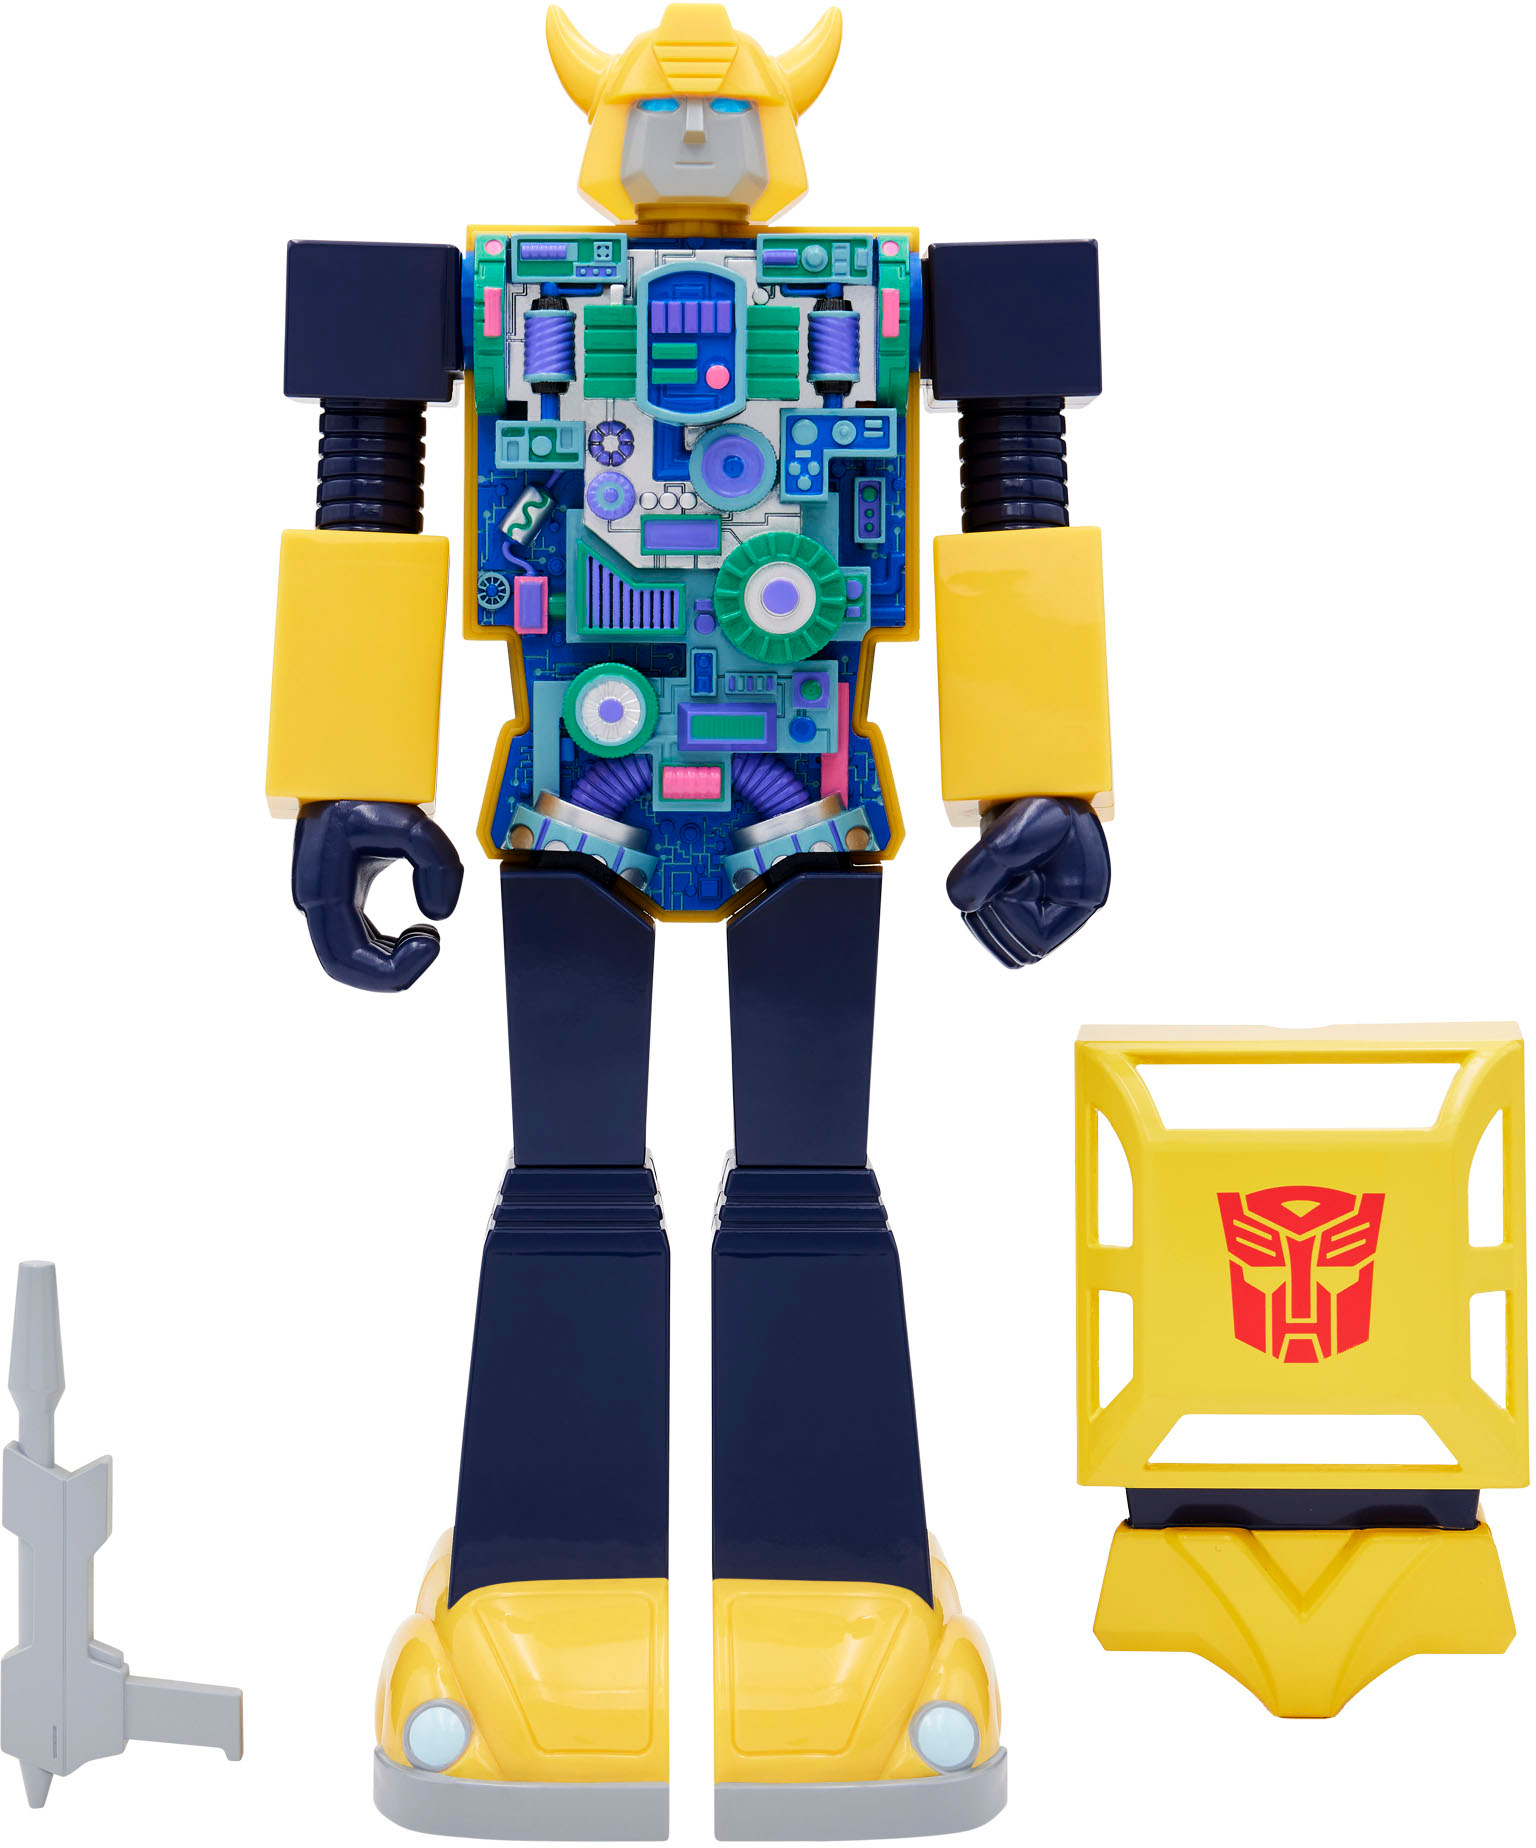 Super7 Super Cyborg 11 in Plastic Transformers Action Figure